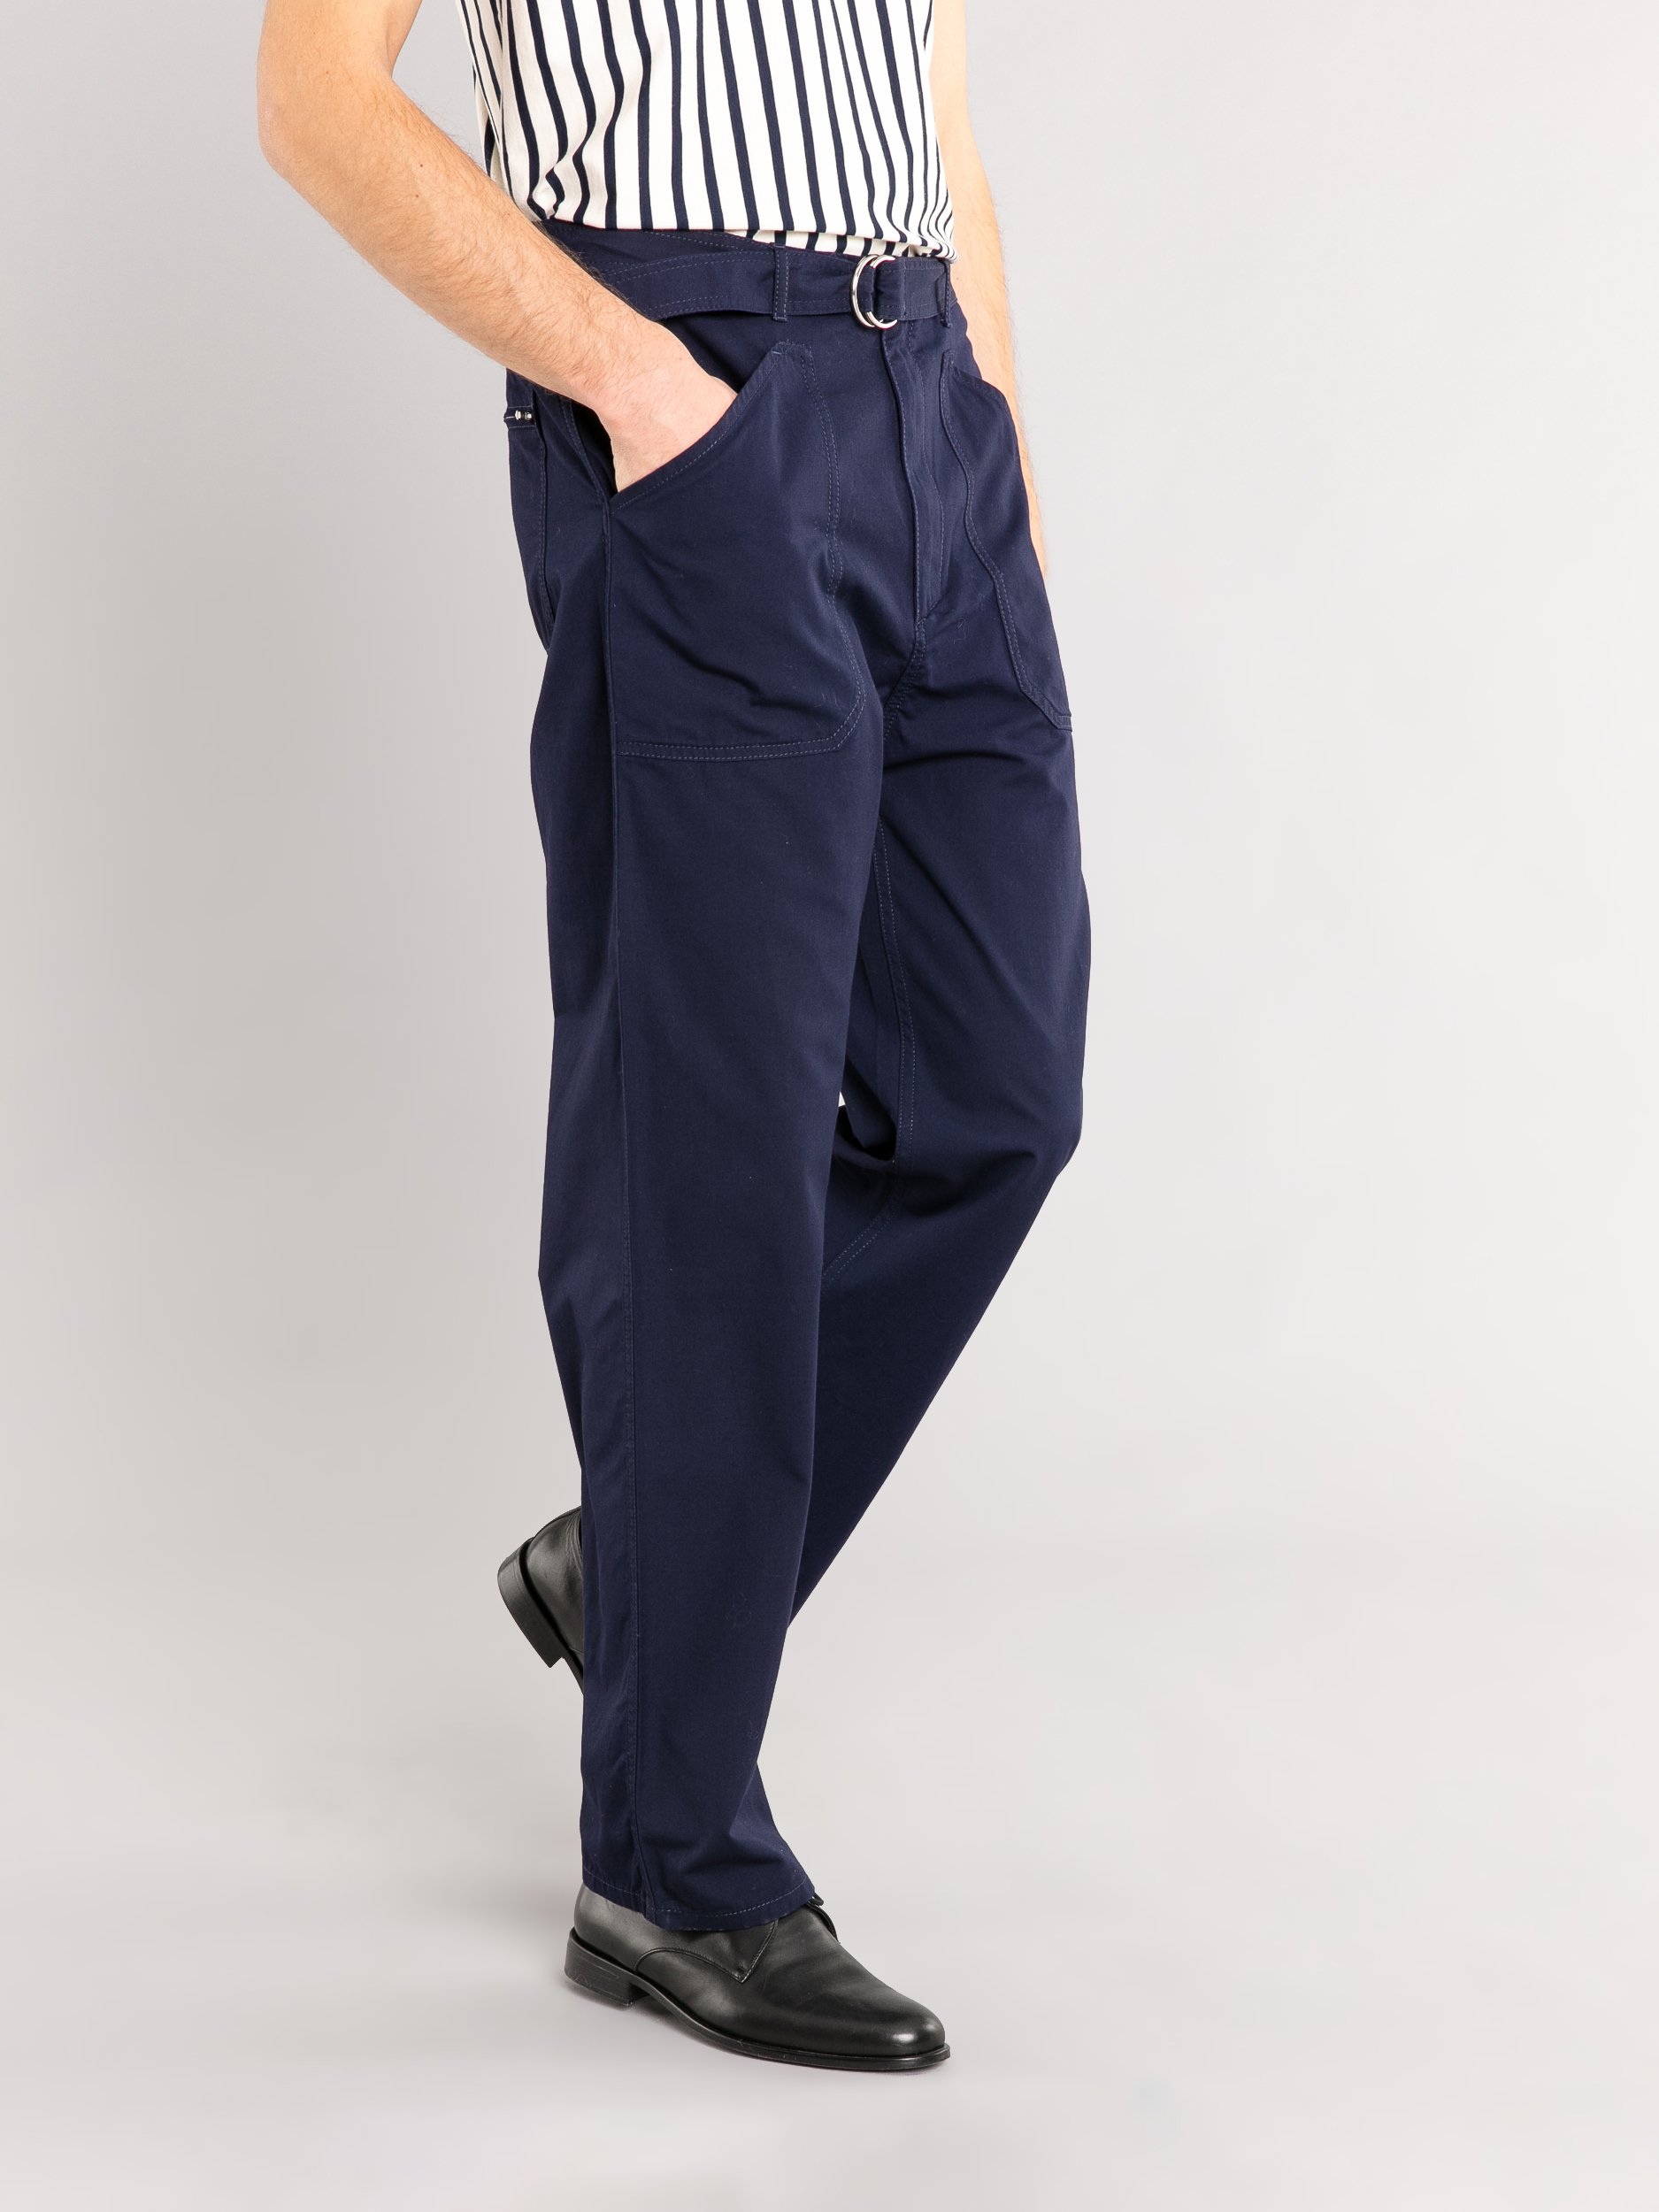 DNC Lightweight Cotton Work Pants 3329  Workwear Direct